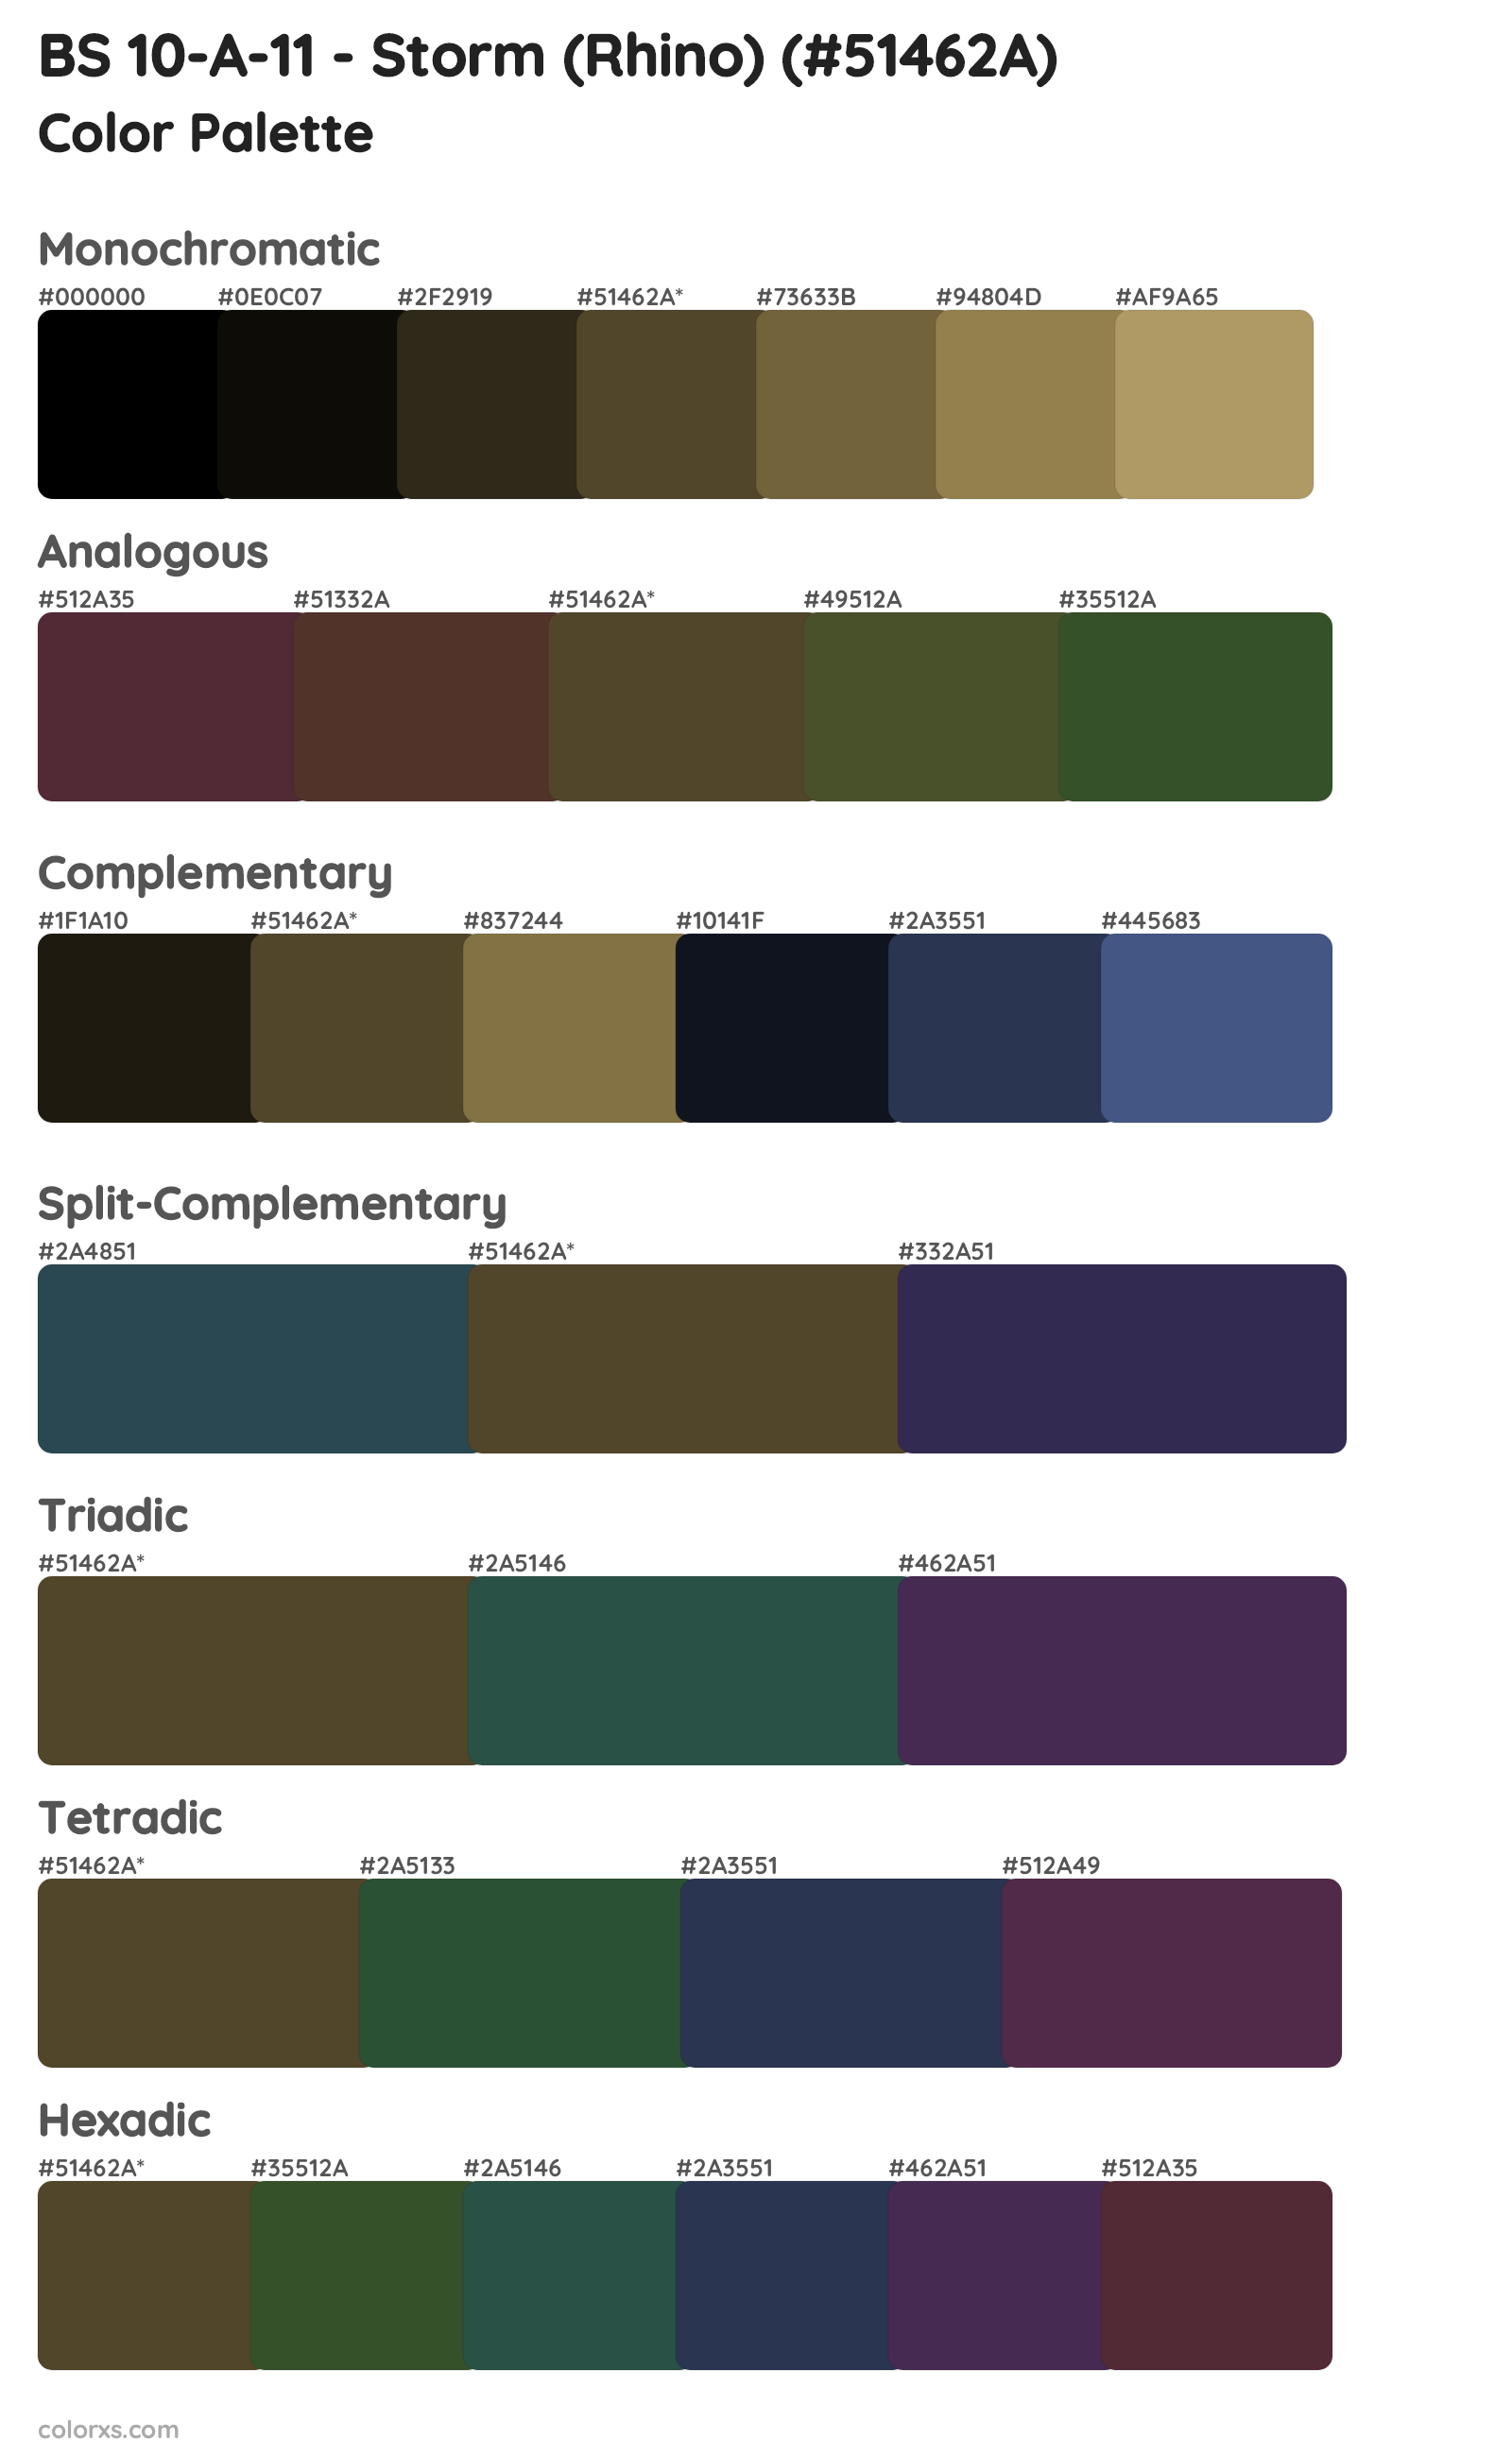 BS 10-A-11 - Storm (Rhino) Color Scheme Palettes